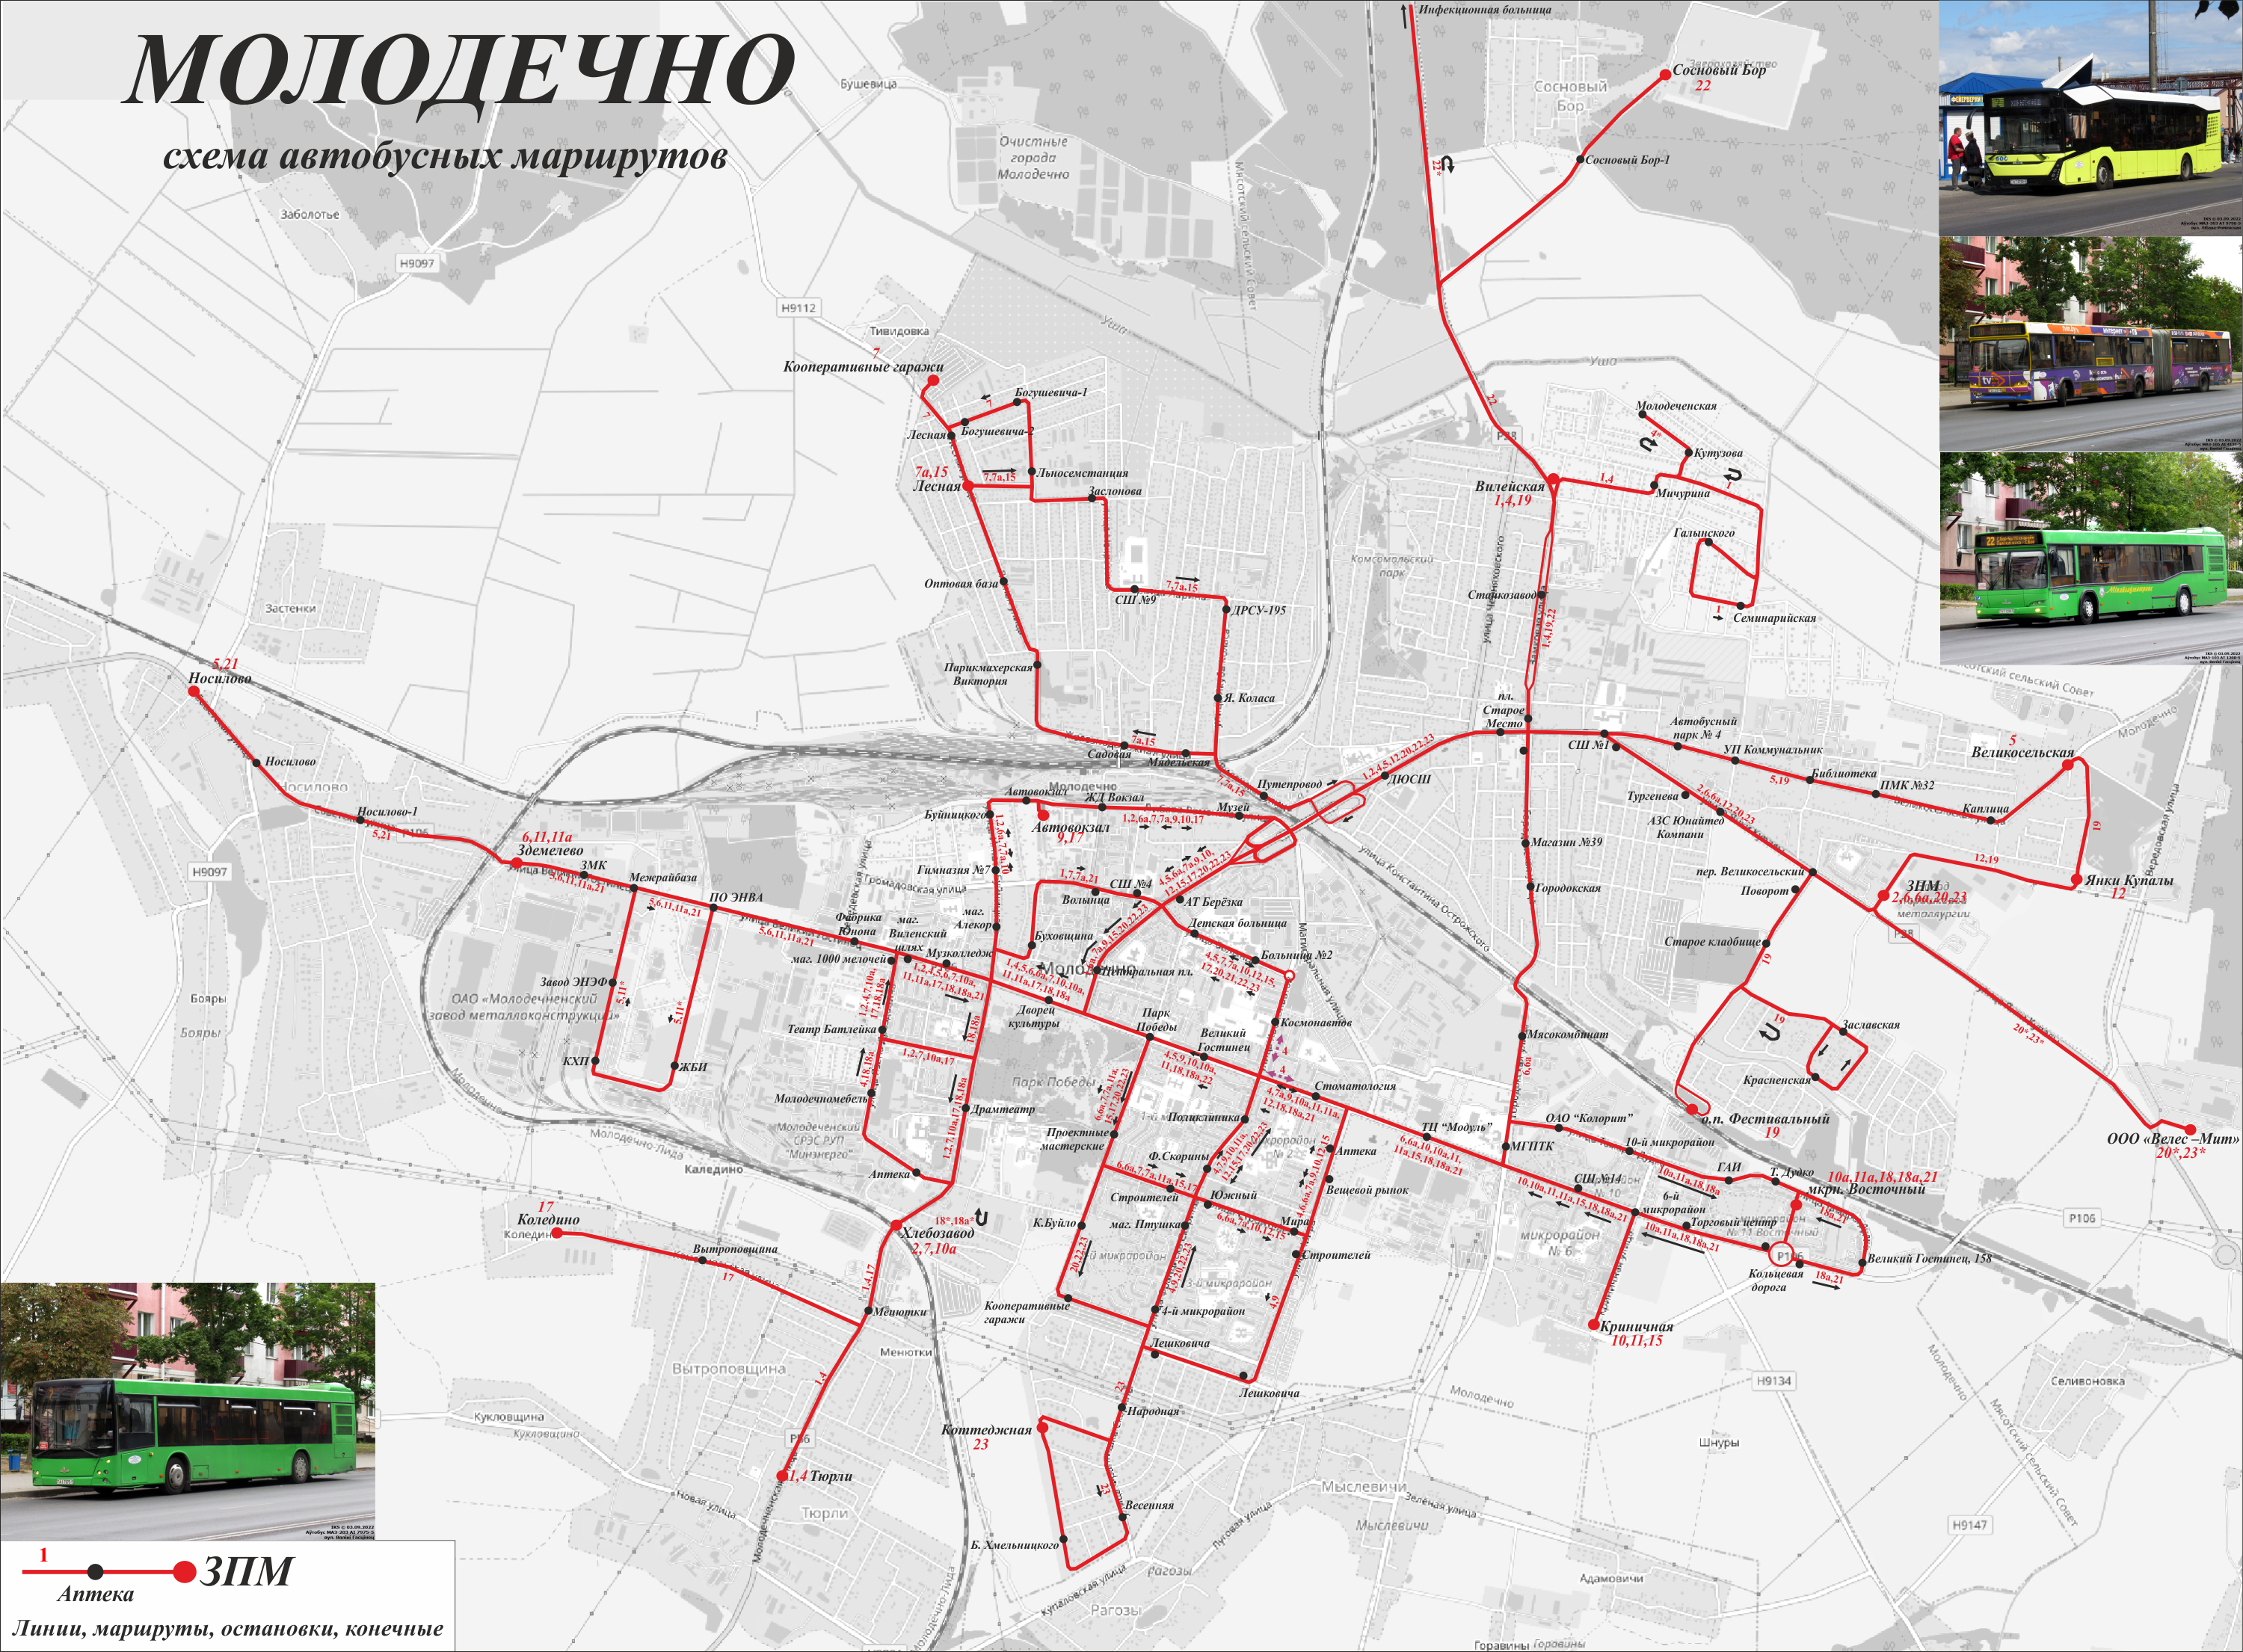 Molodechno — Maps; Maps routes